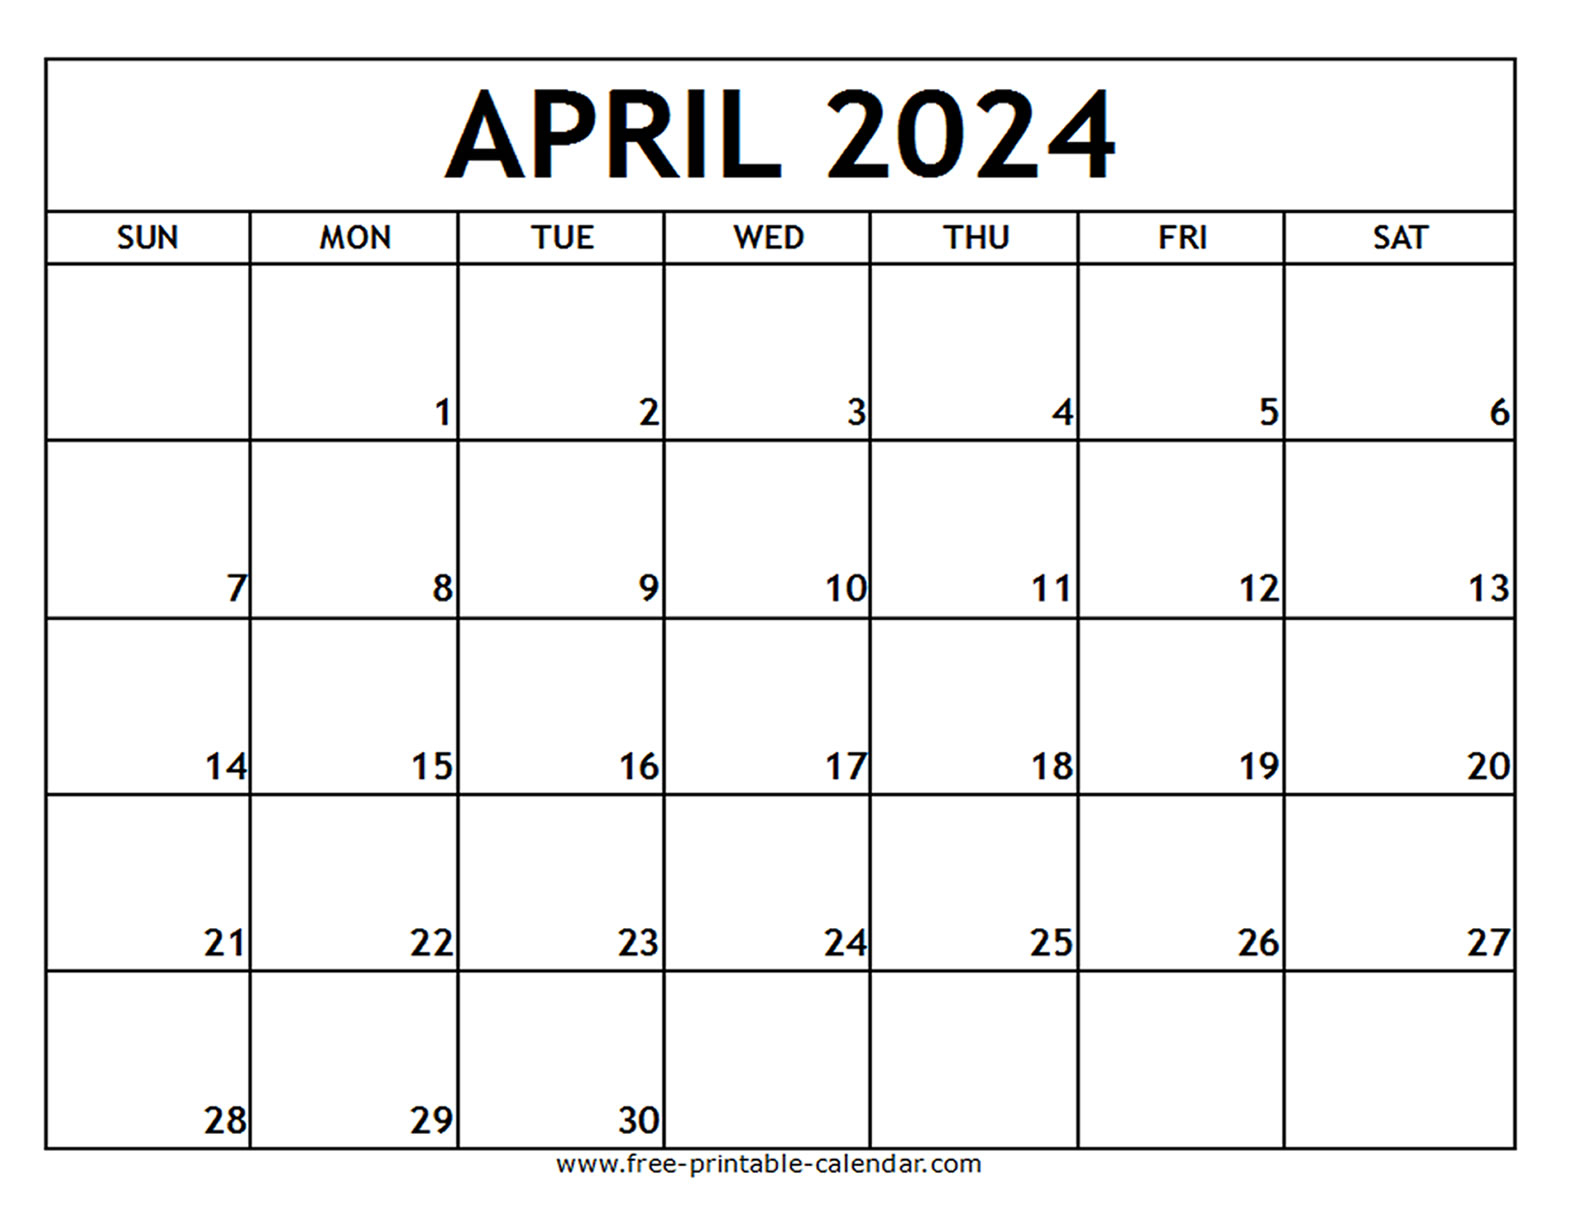 April 2024 Printable Calendar - Free-Printable-Calendar for April 2024 Blank Calendar Template